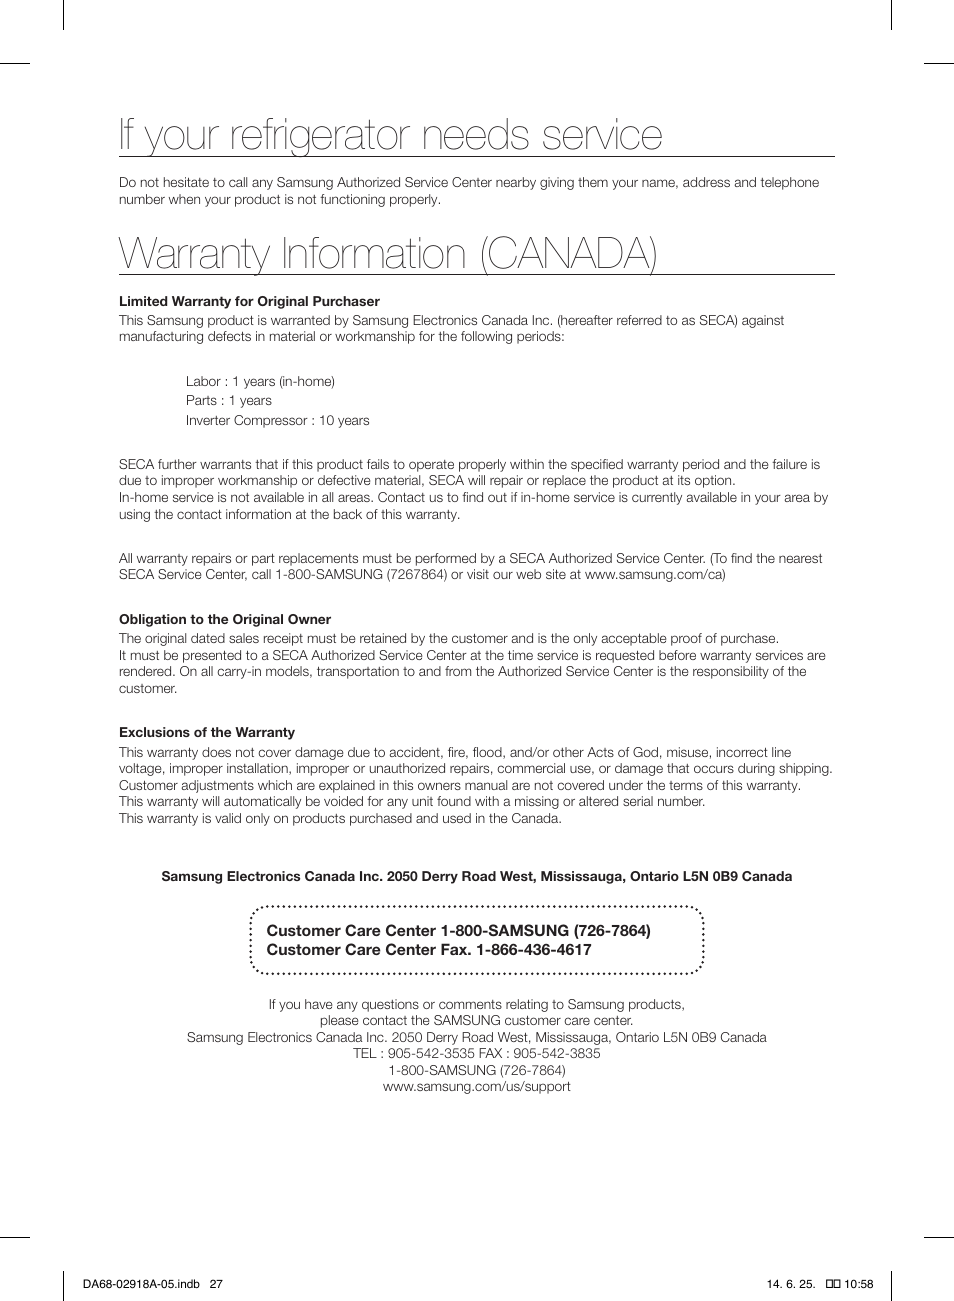 If your refrigerator needs service, Warranty information (canada